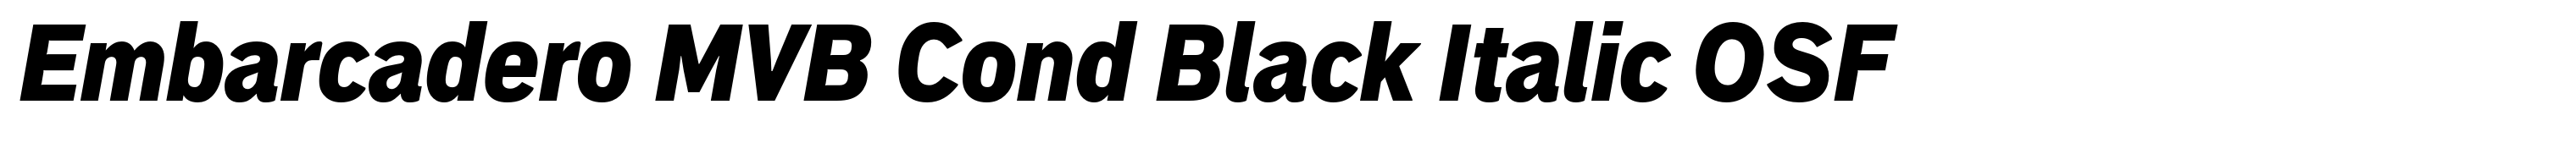 Embarcadero MVB Cond Black Italic OSF